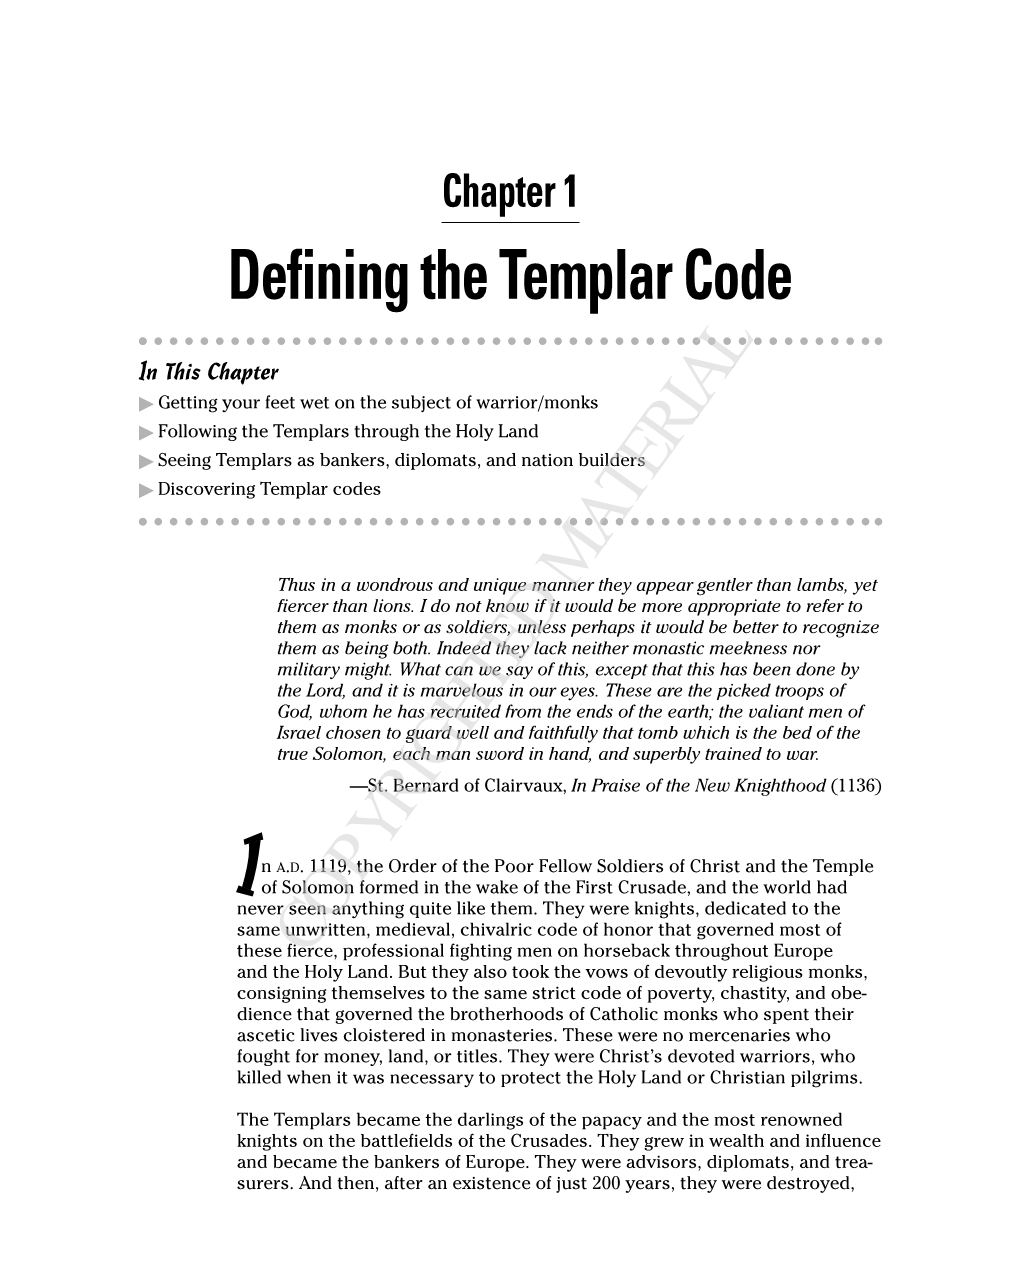 Defining the Templar Code